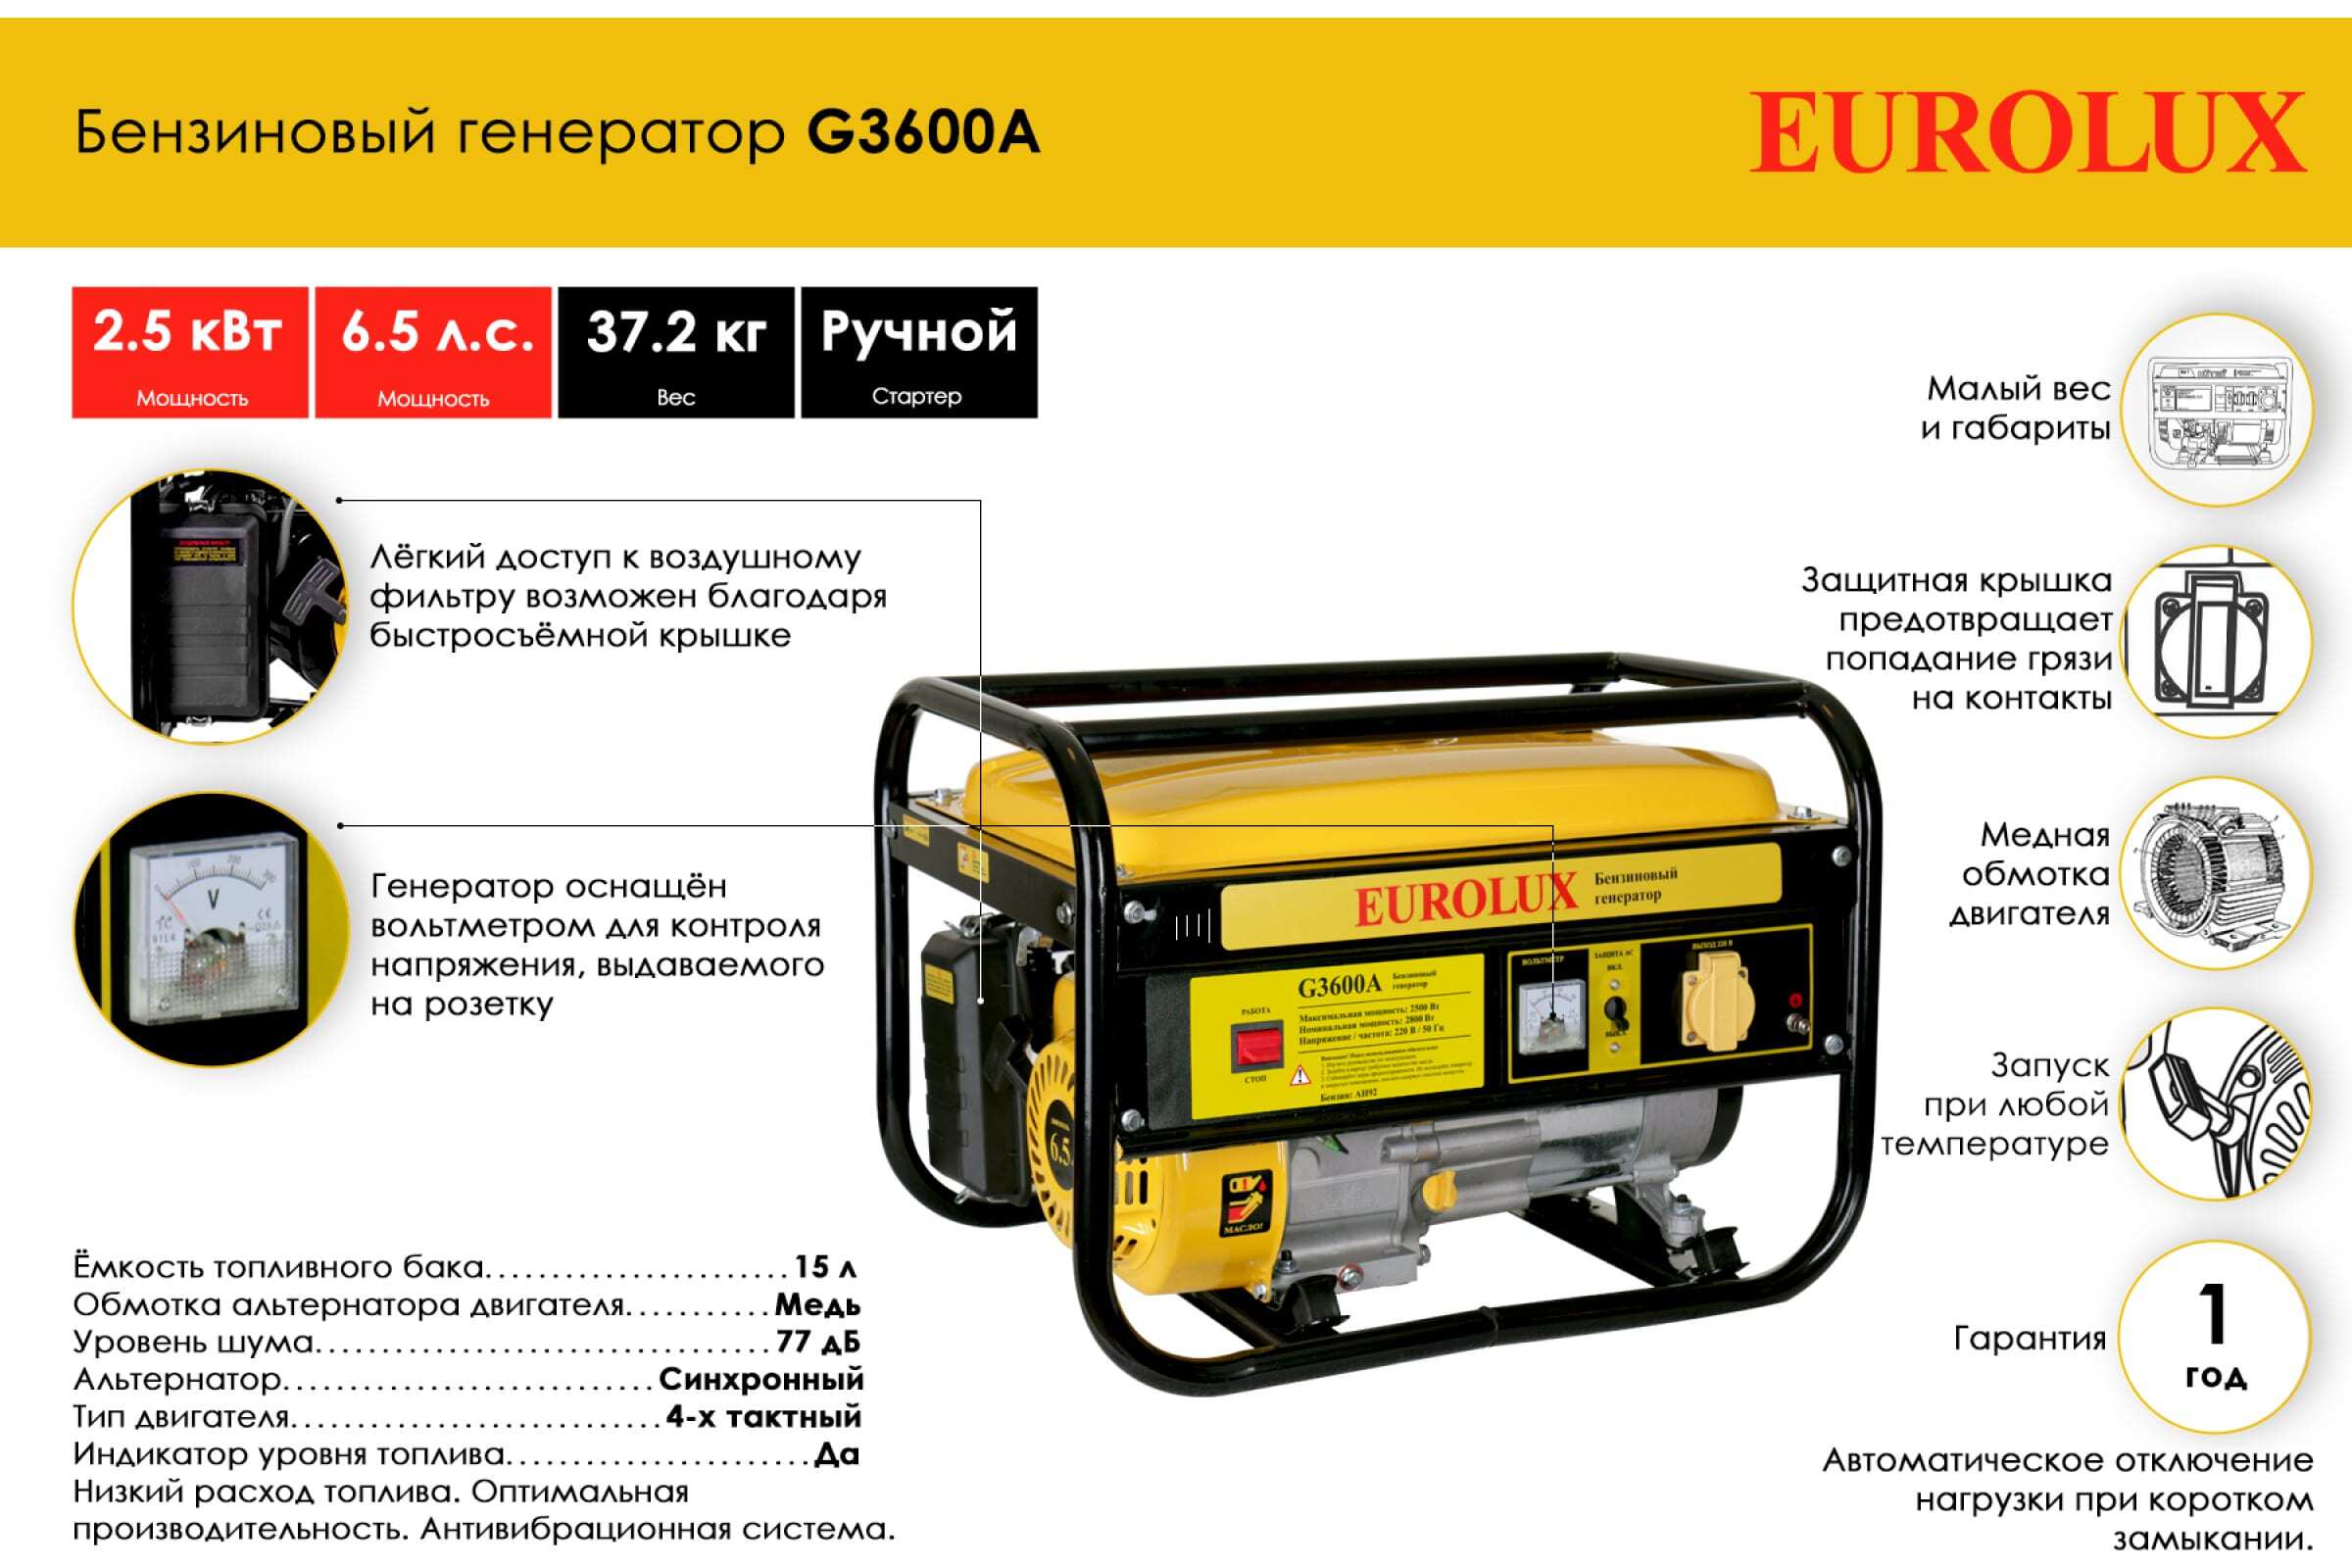 Eurolux g6500a. Электрогенератор g2700a Eurolux 64/1/36. Электрогенератор g6500a Eurolux. Электростанция бензиновая Eurolux g4000a (64/1/38). Бензиновый Генератор Eurolux g2700a.